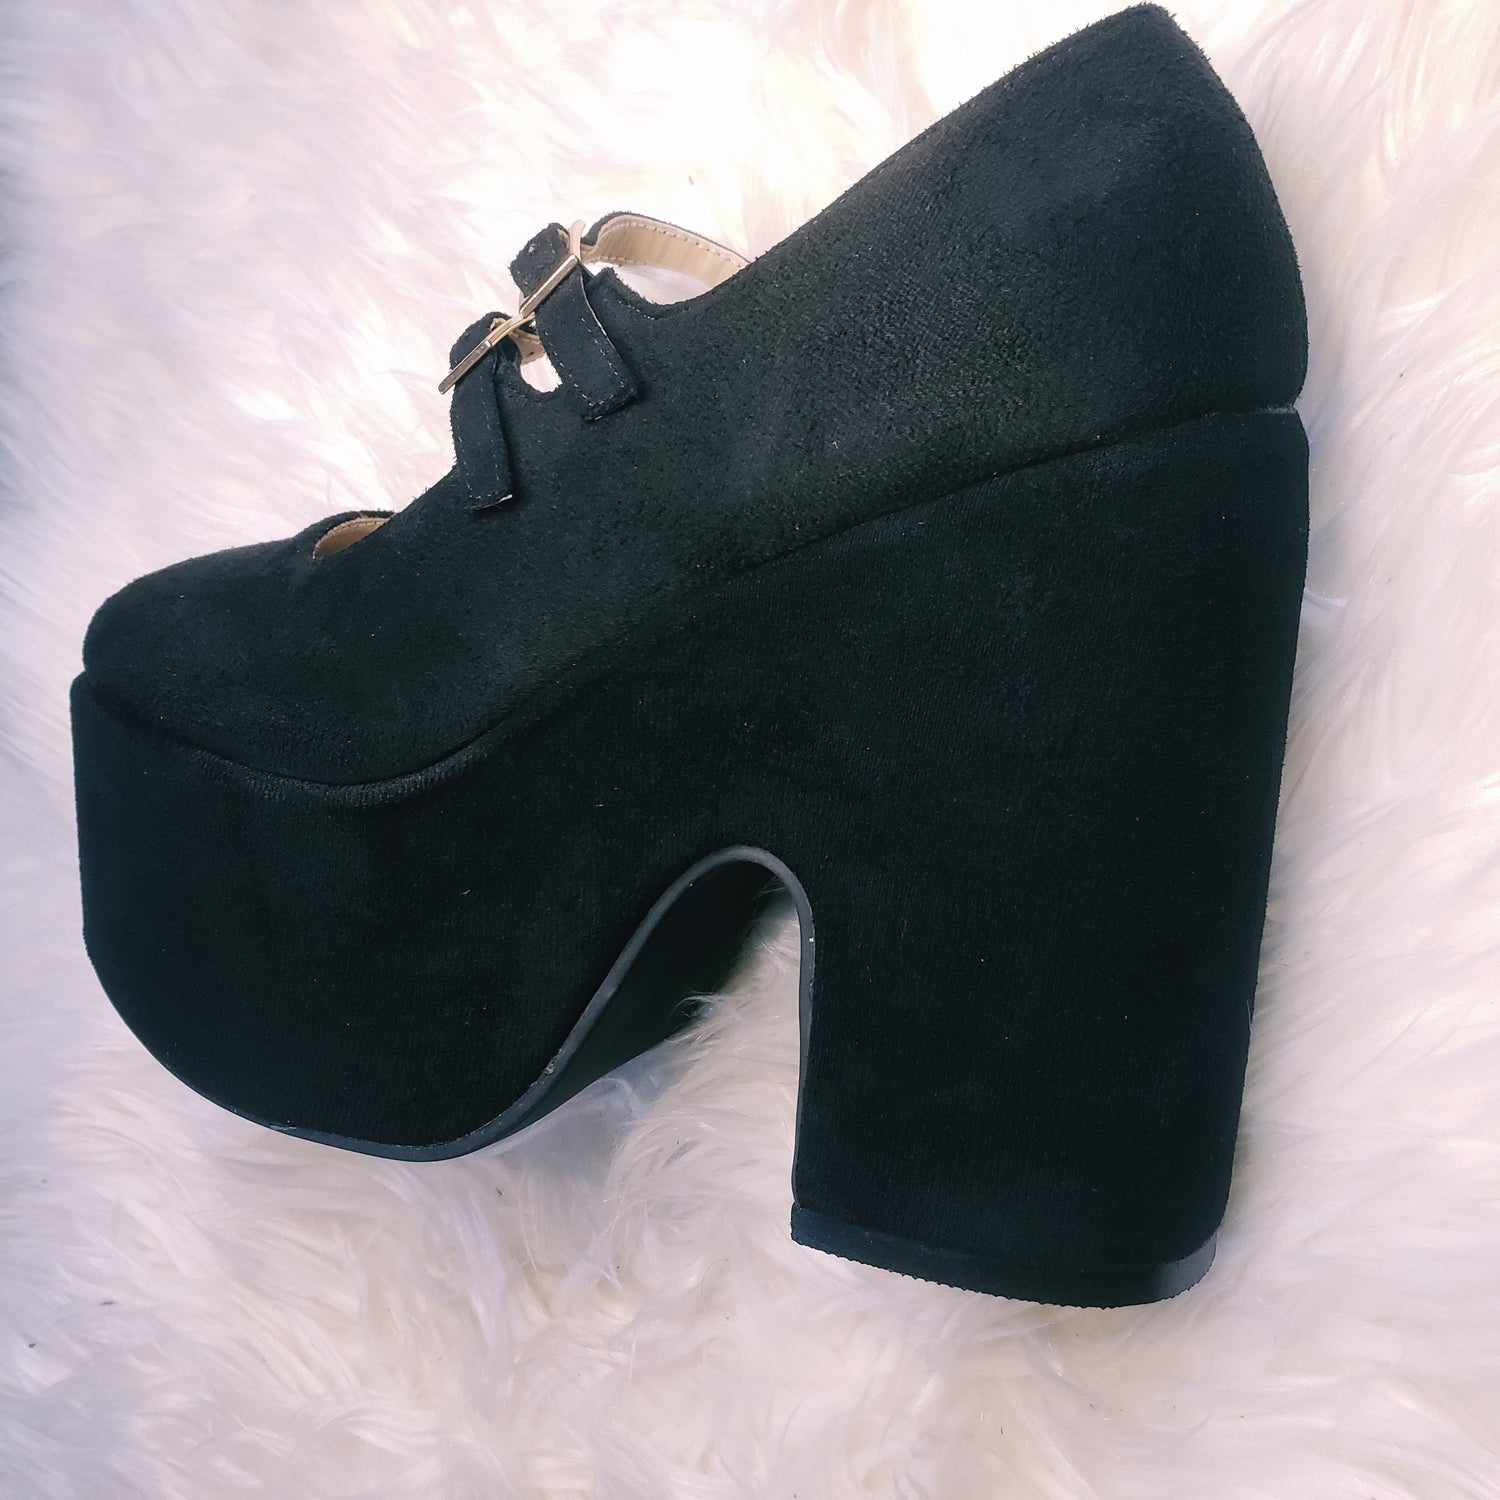 Black retro chunky platform mary jane heels. Black suede round toe platform heels inspired by the 70's. 